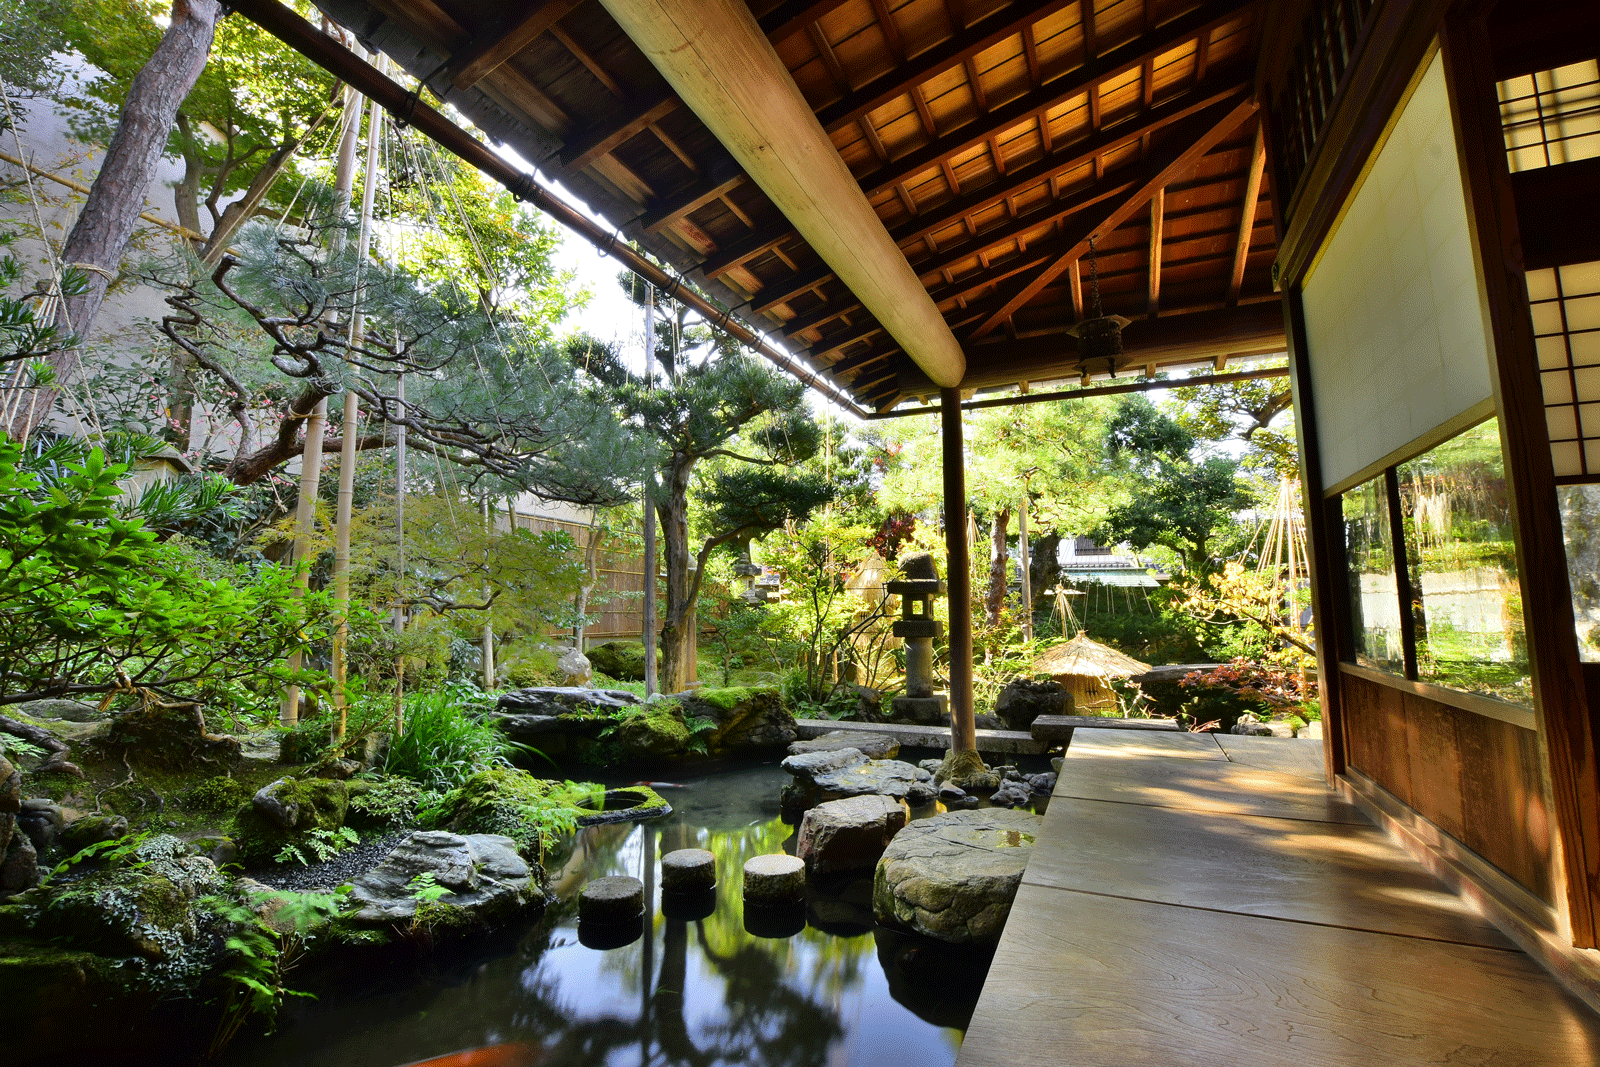 The Nomura House in Kanazawa, associated with the powerful samurai of the Edo period